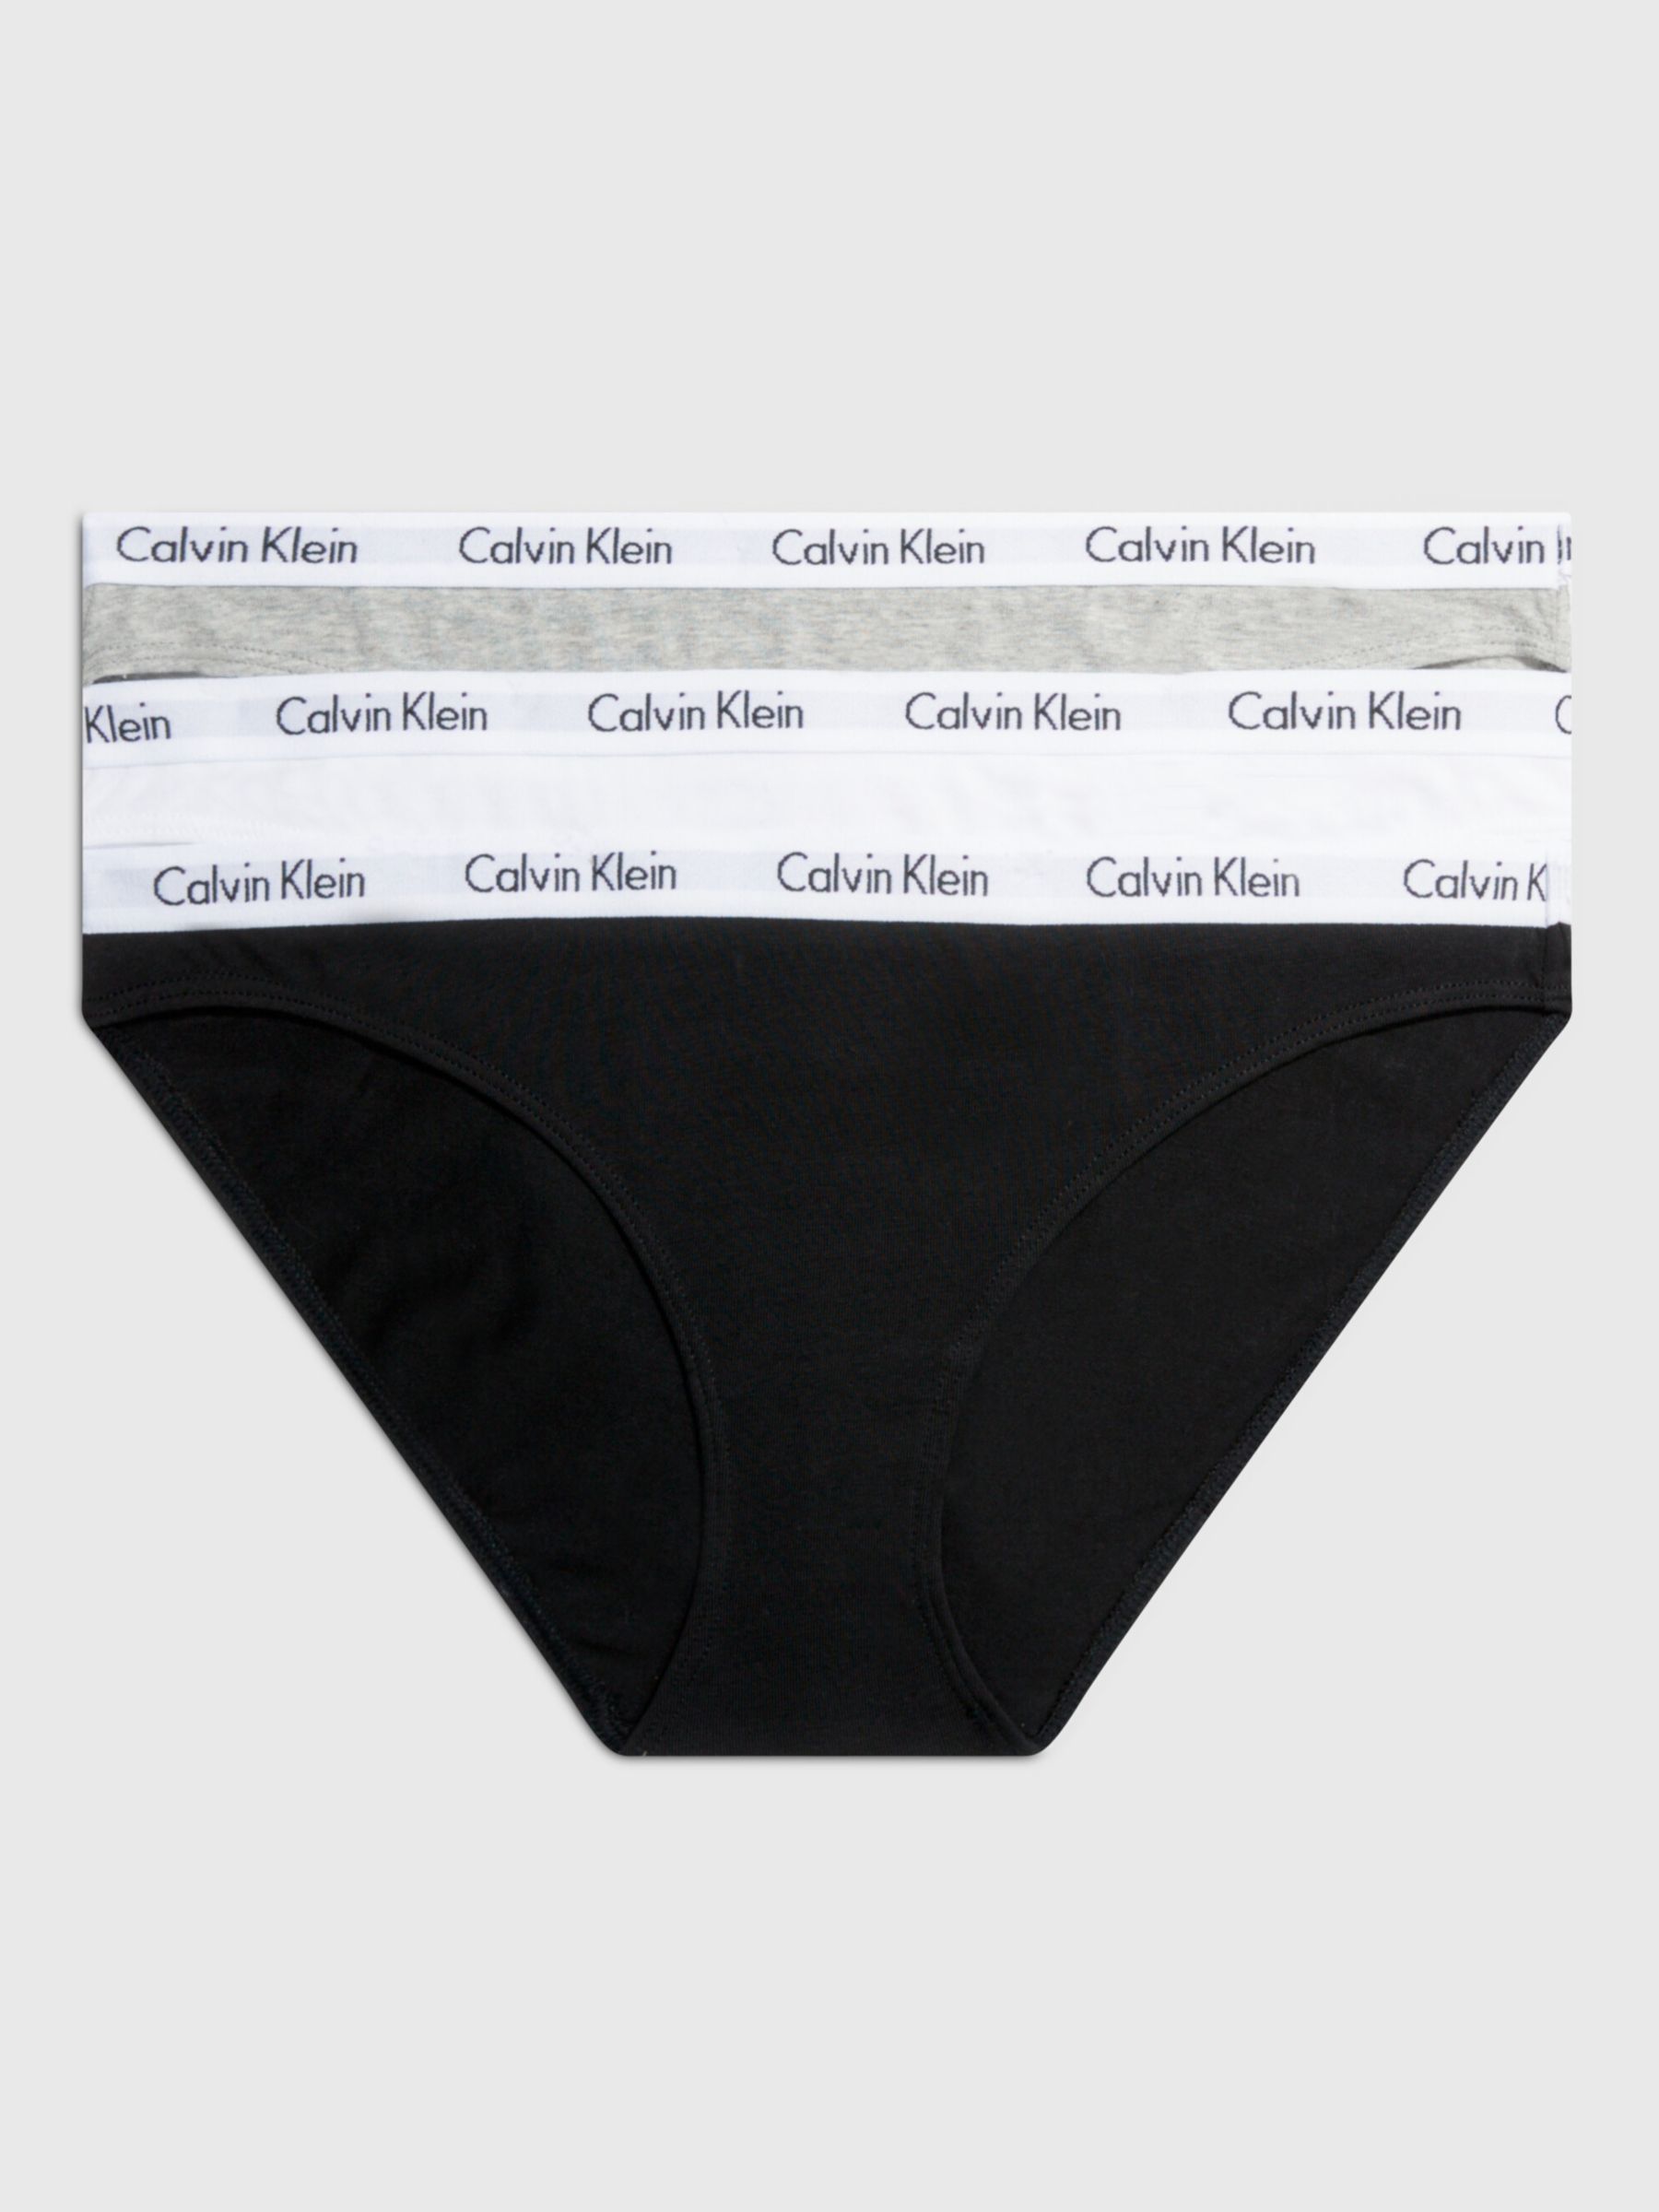 Calvin Klein Carousel Bikini Knickers, Pack of 3, Black/White/Grey at ...